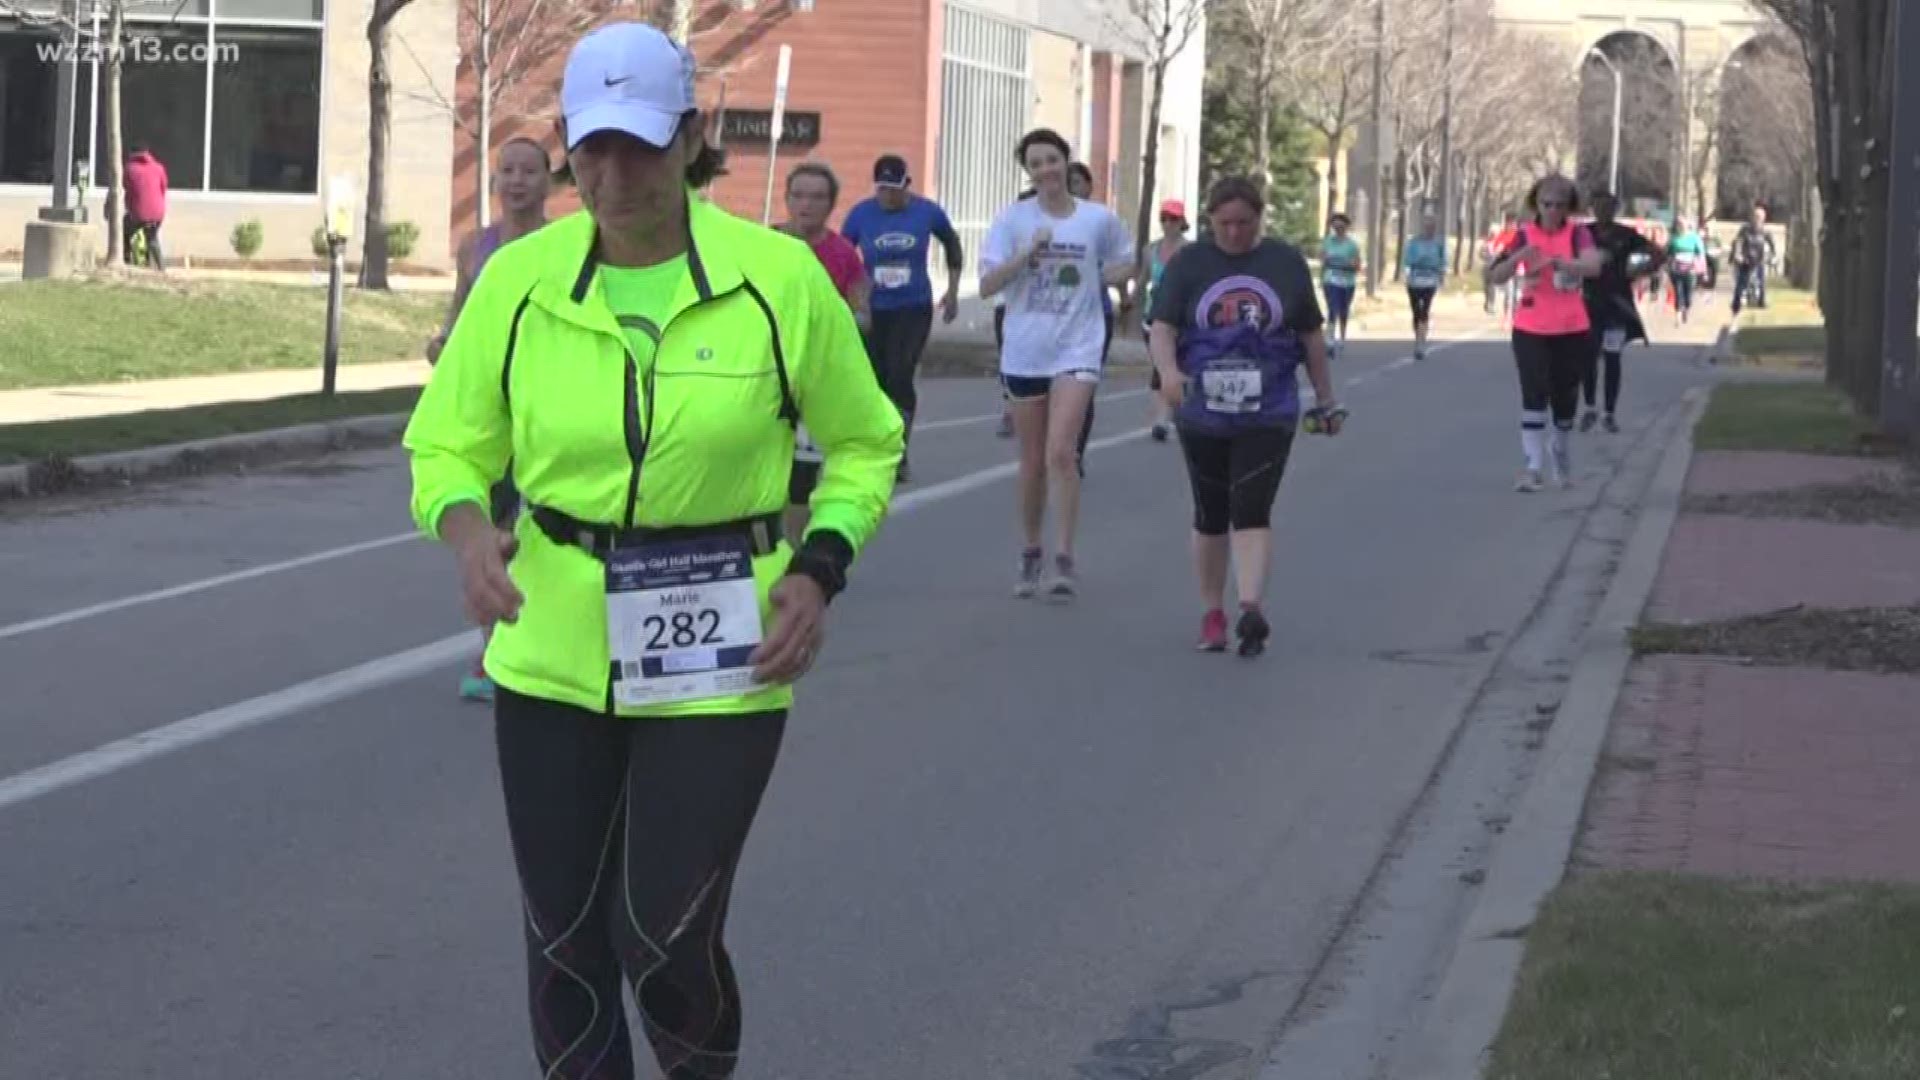 The Gazelle Girl Half Marathon takes place Sunday, April 14 in Grand Rapids.